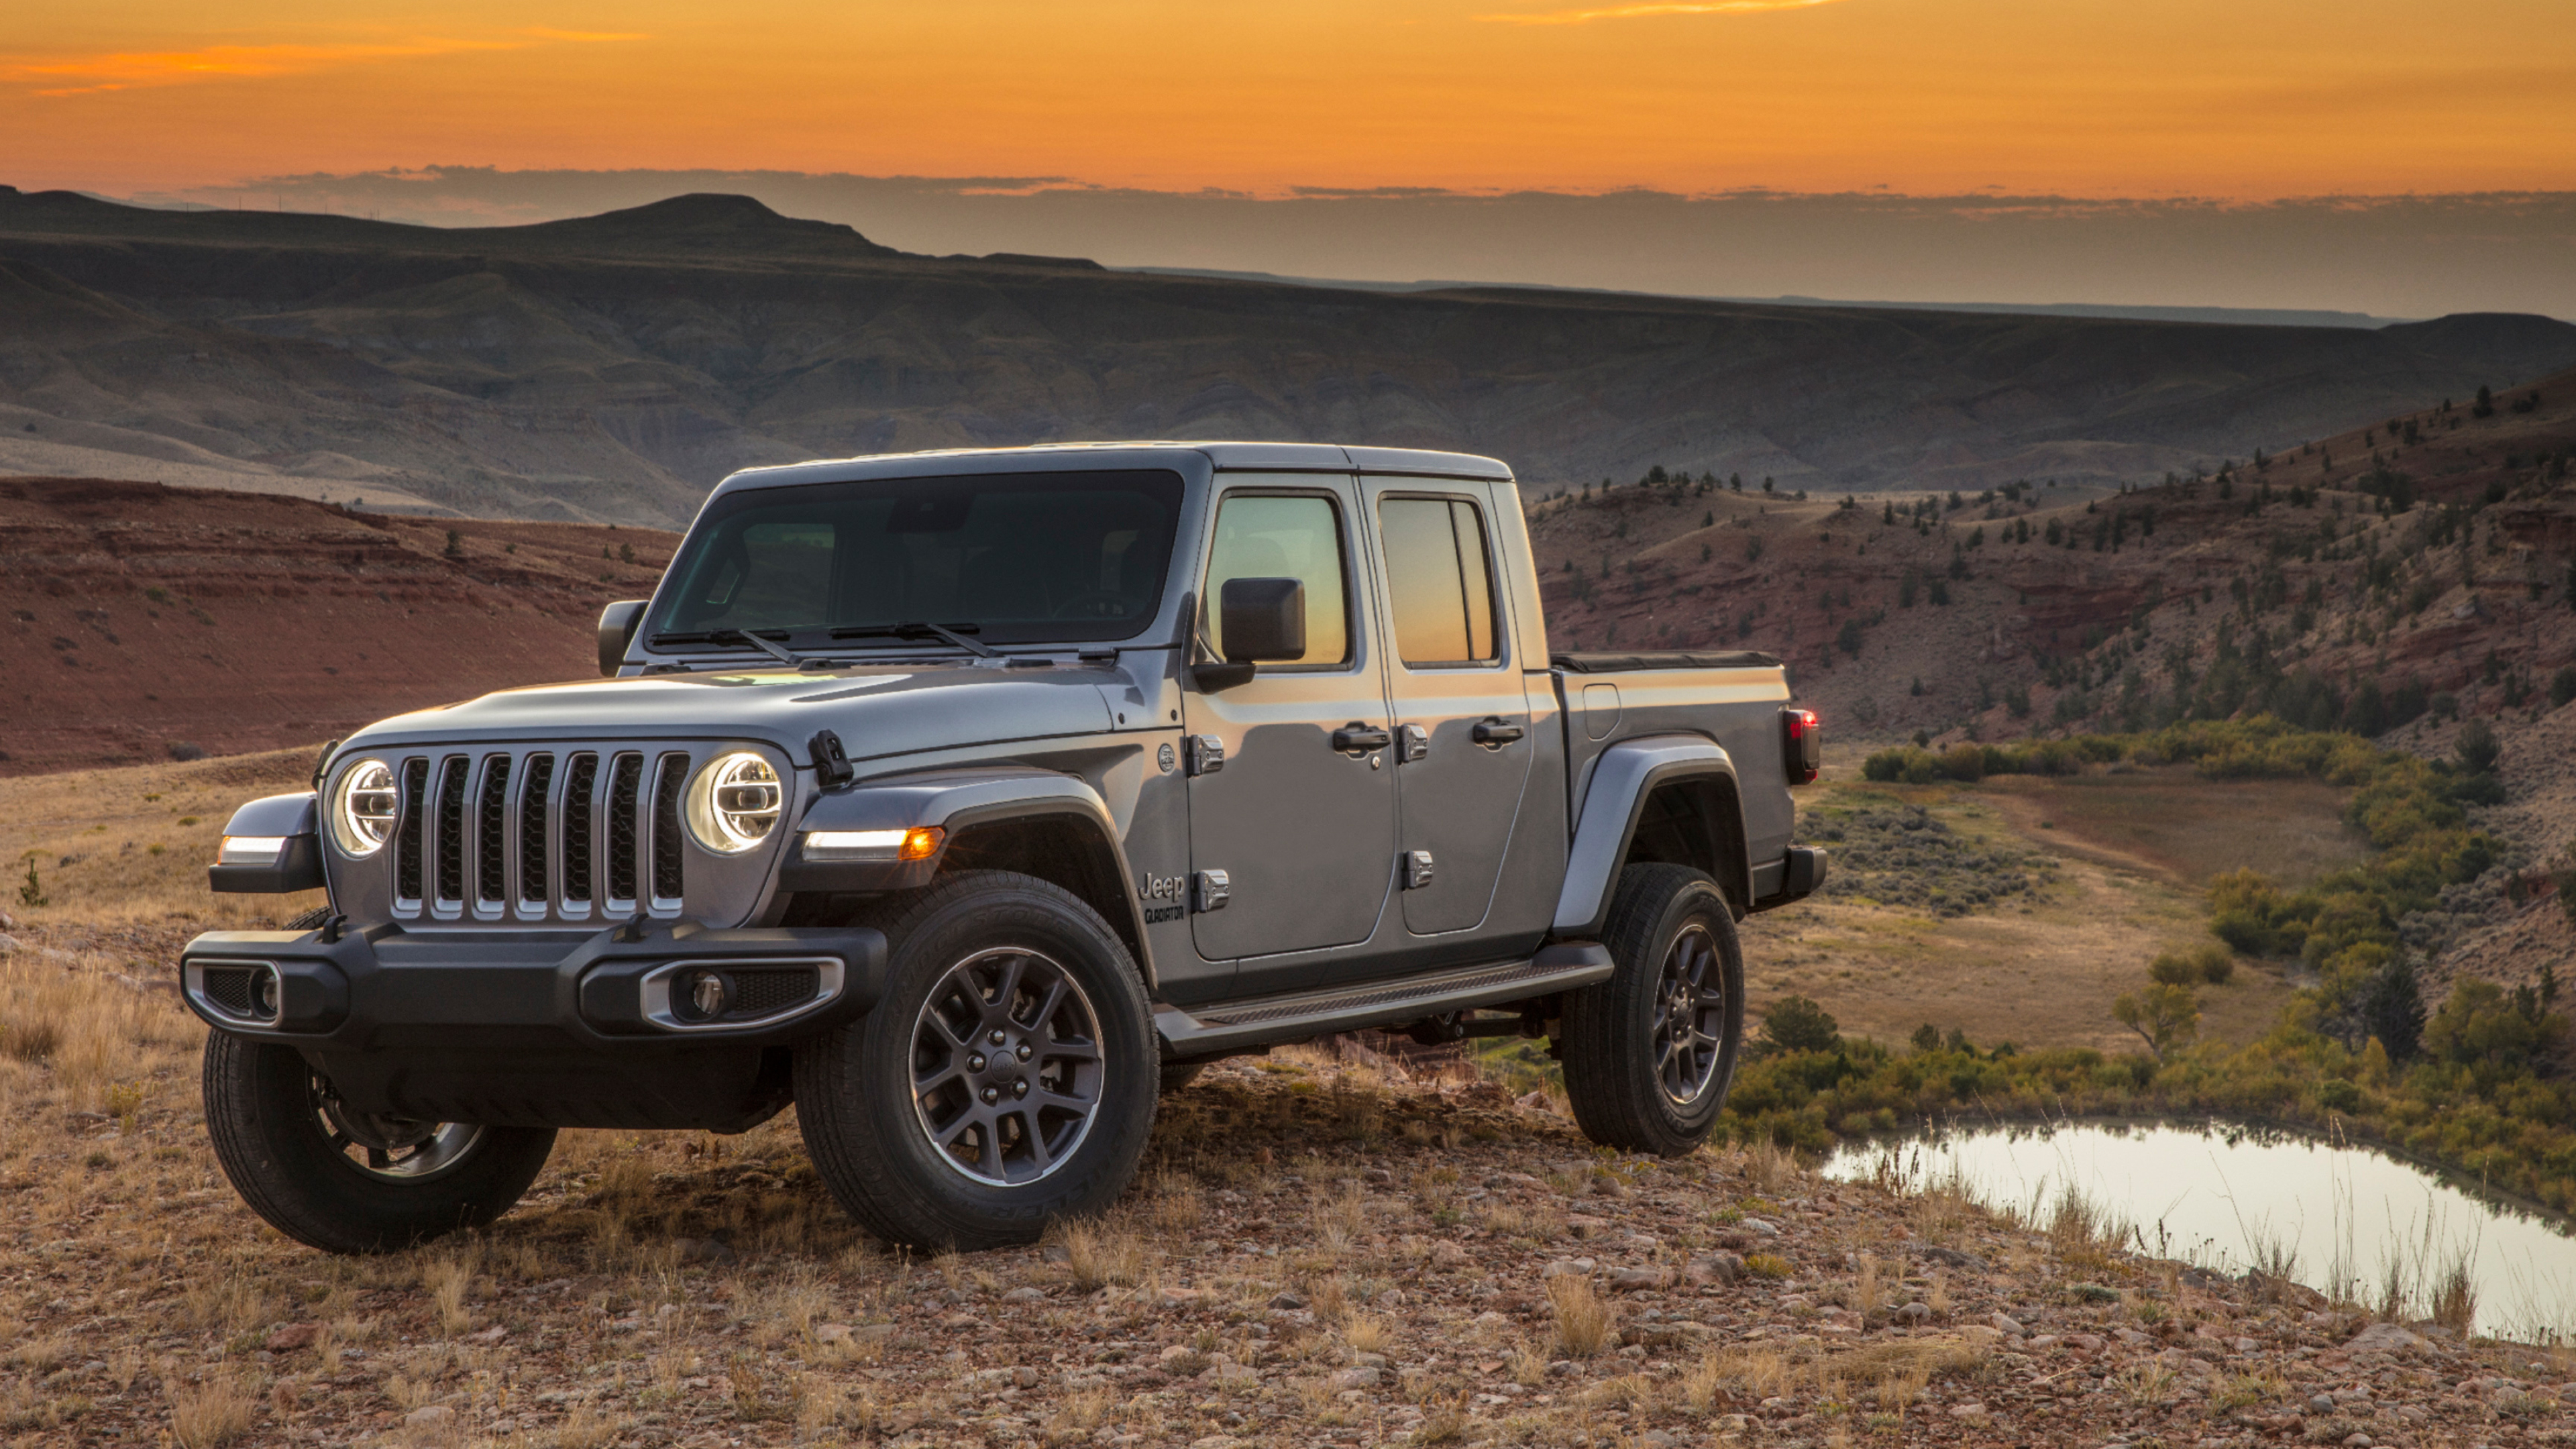 Jeep Gladiator, Cars desktop wallpapers, Overland model, 2019 release, 3840x2160 4K Desktop